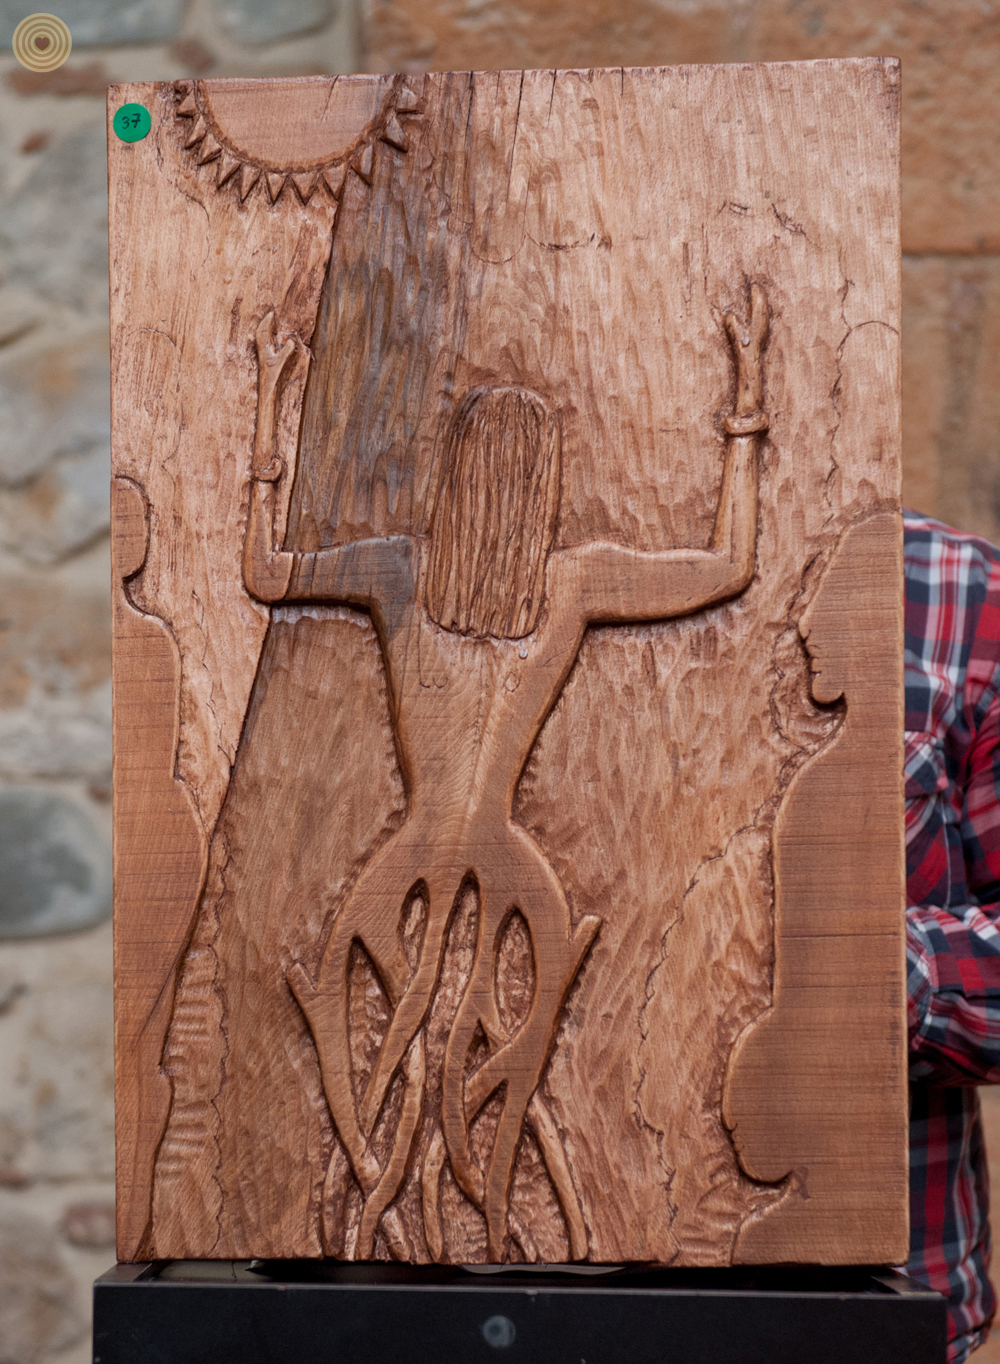 2015 WWD, woodcarving, exhibition, Turkey